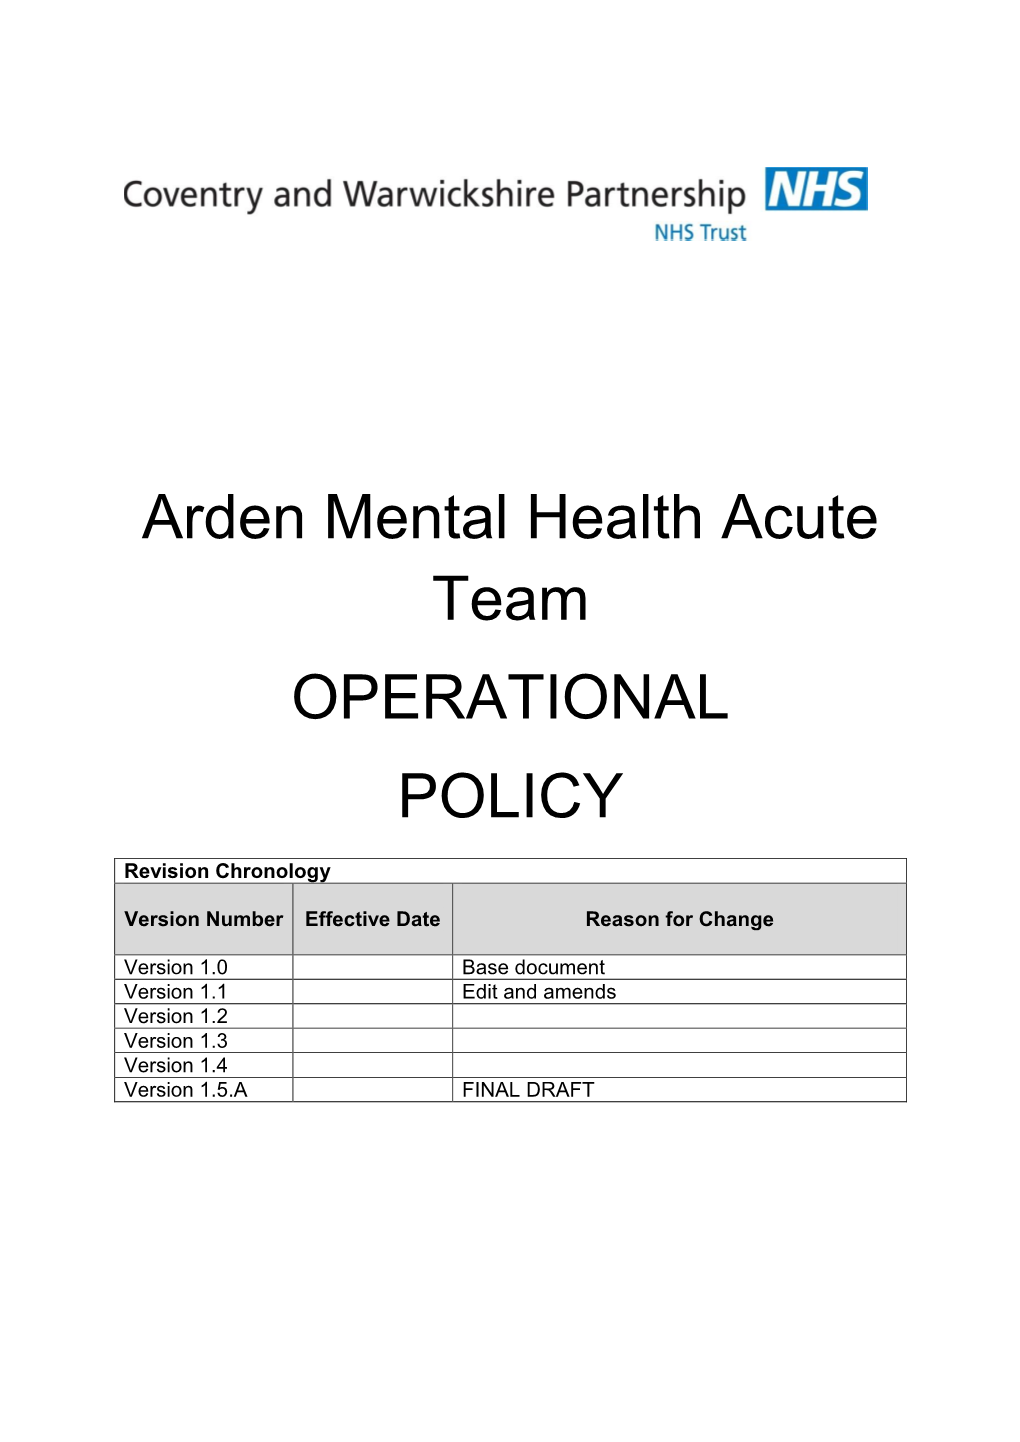 Arden Mental Health Acute Team OPERATIONAL POLICY